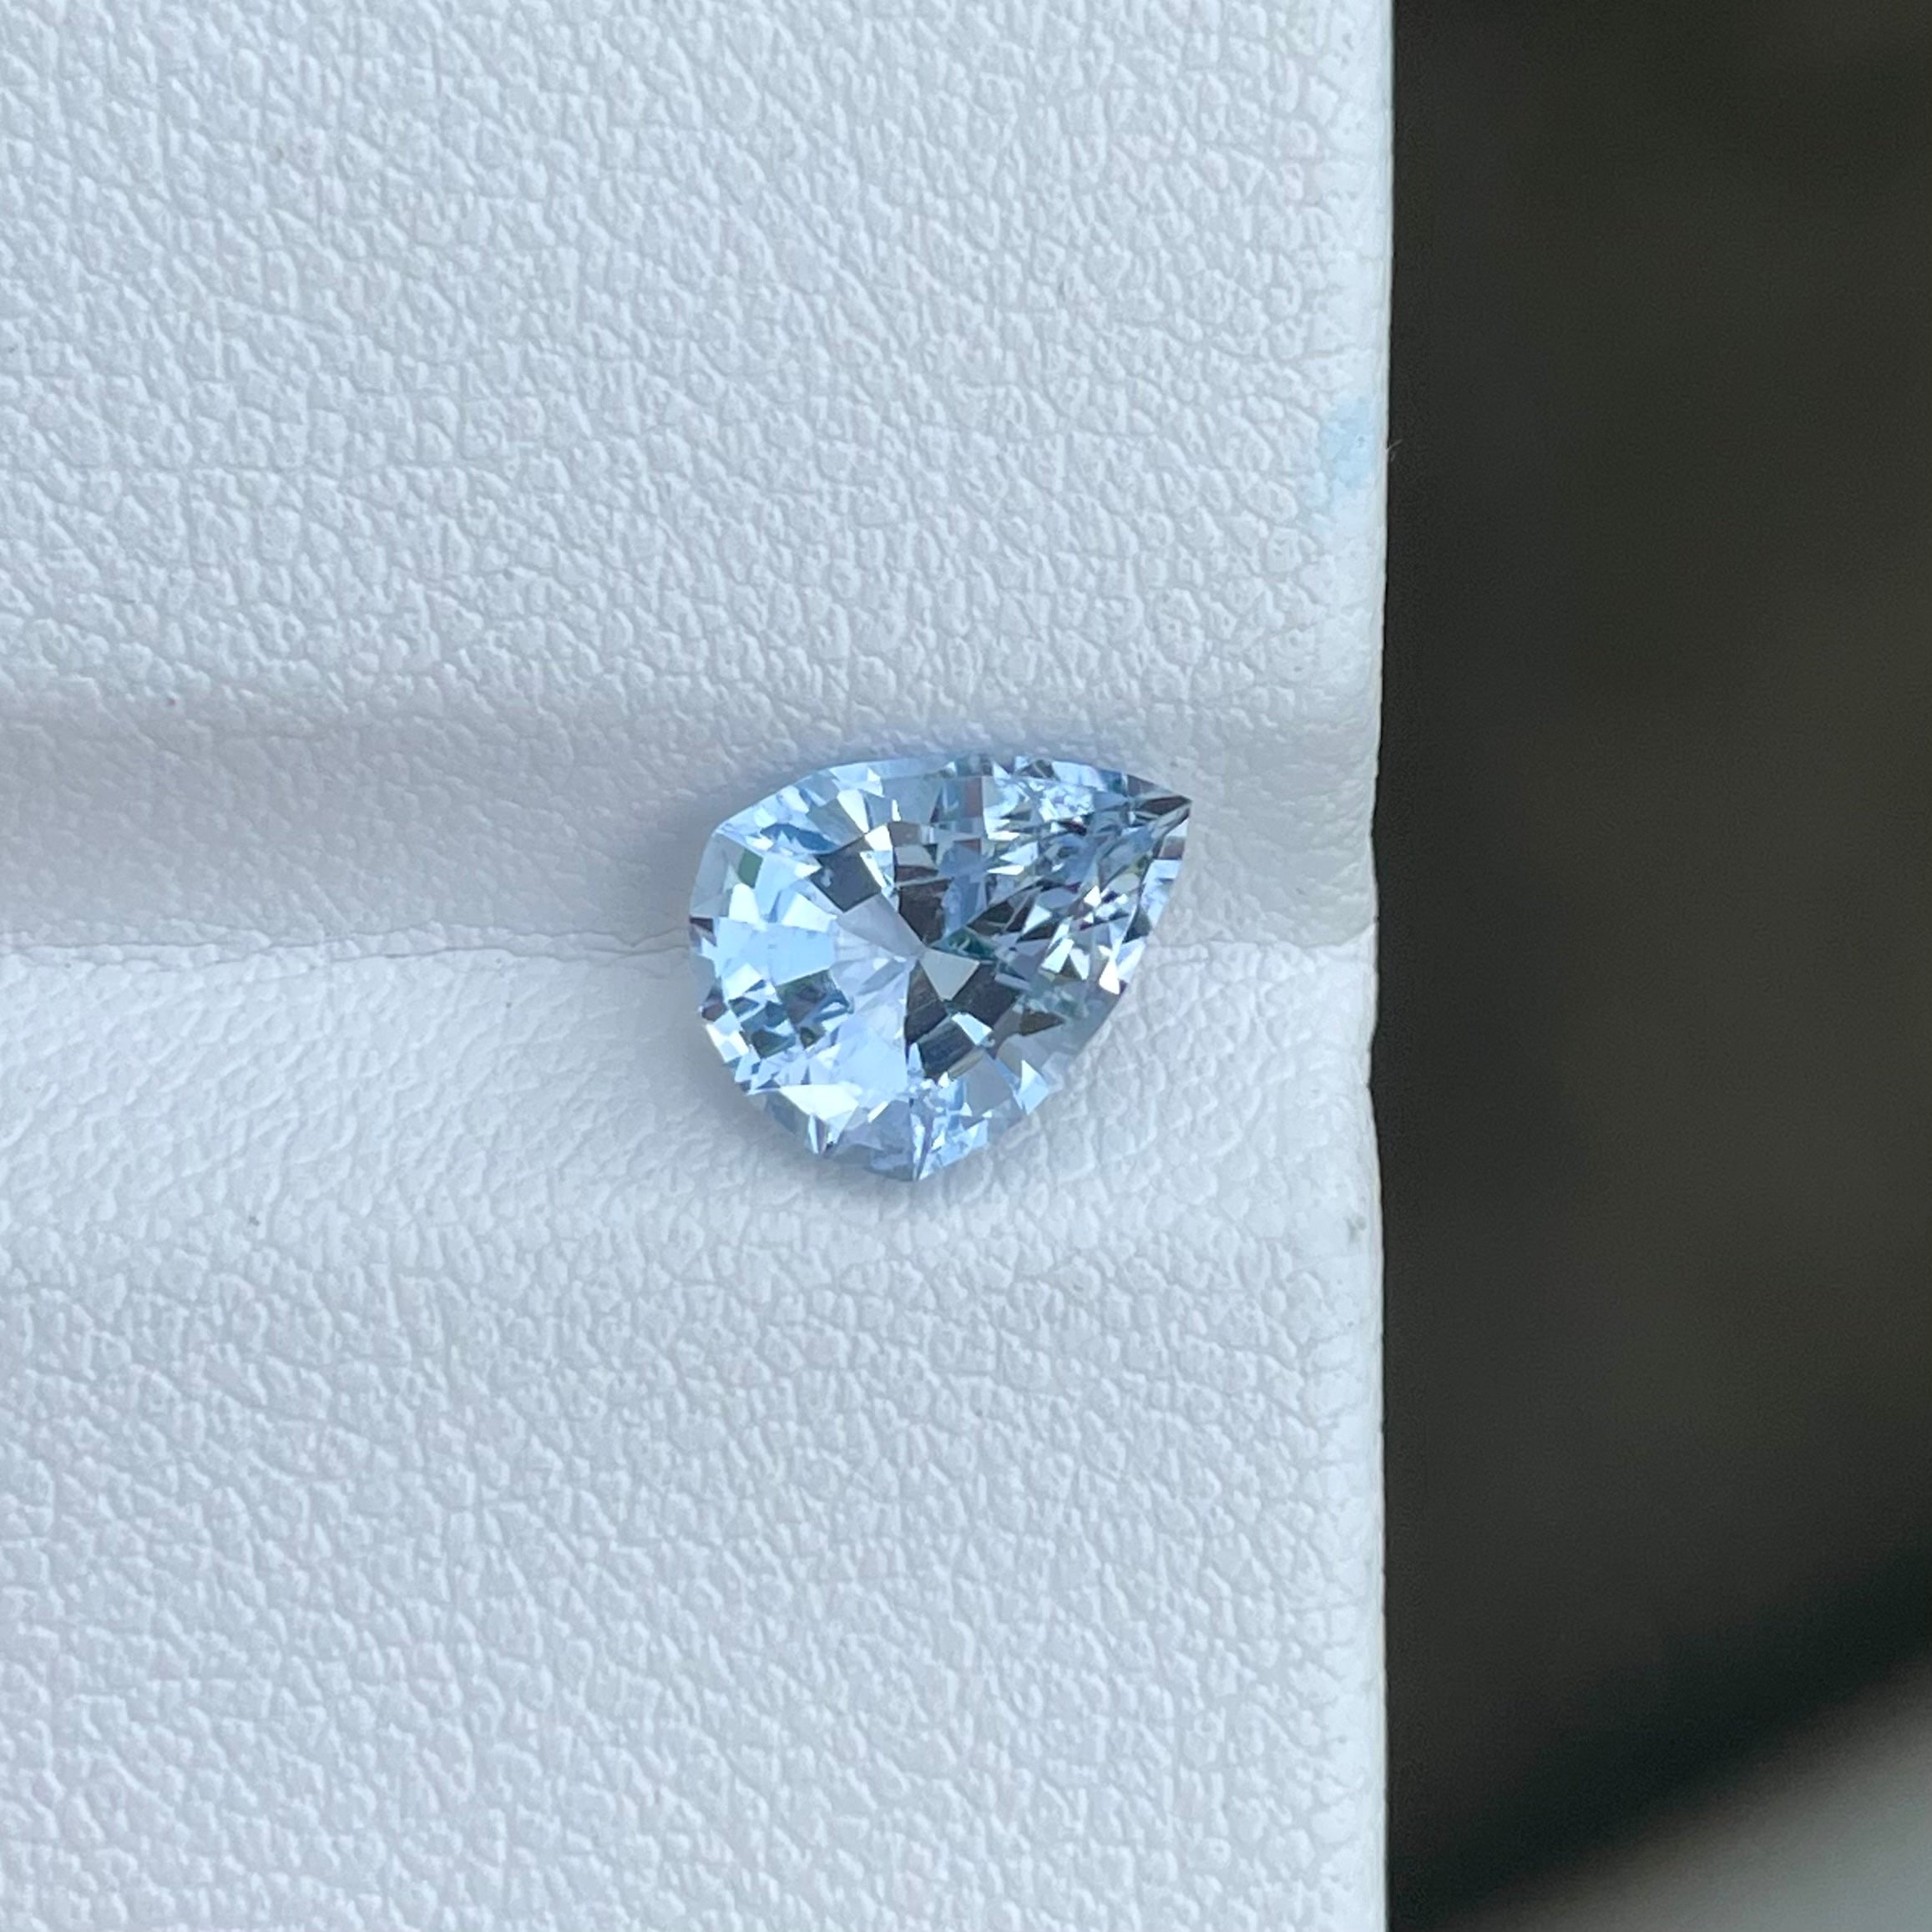 Splendid Pear Shaped Aquamarine 1.80 carats Natural Loose Pakistani Gemstone